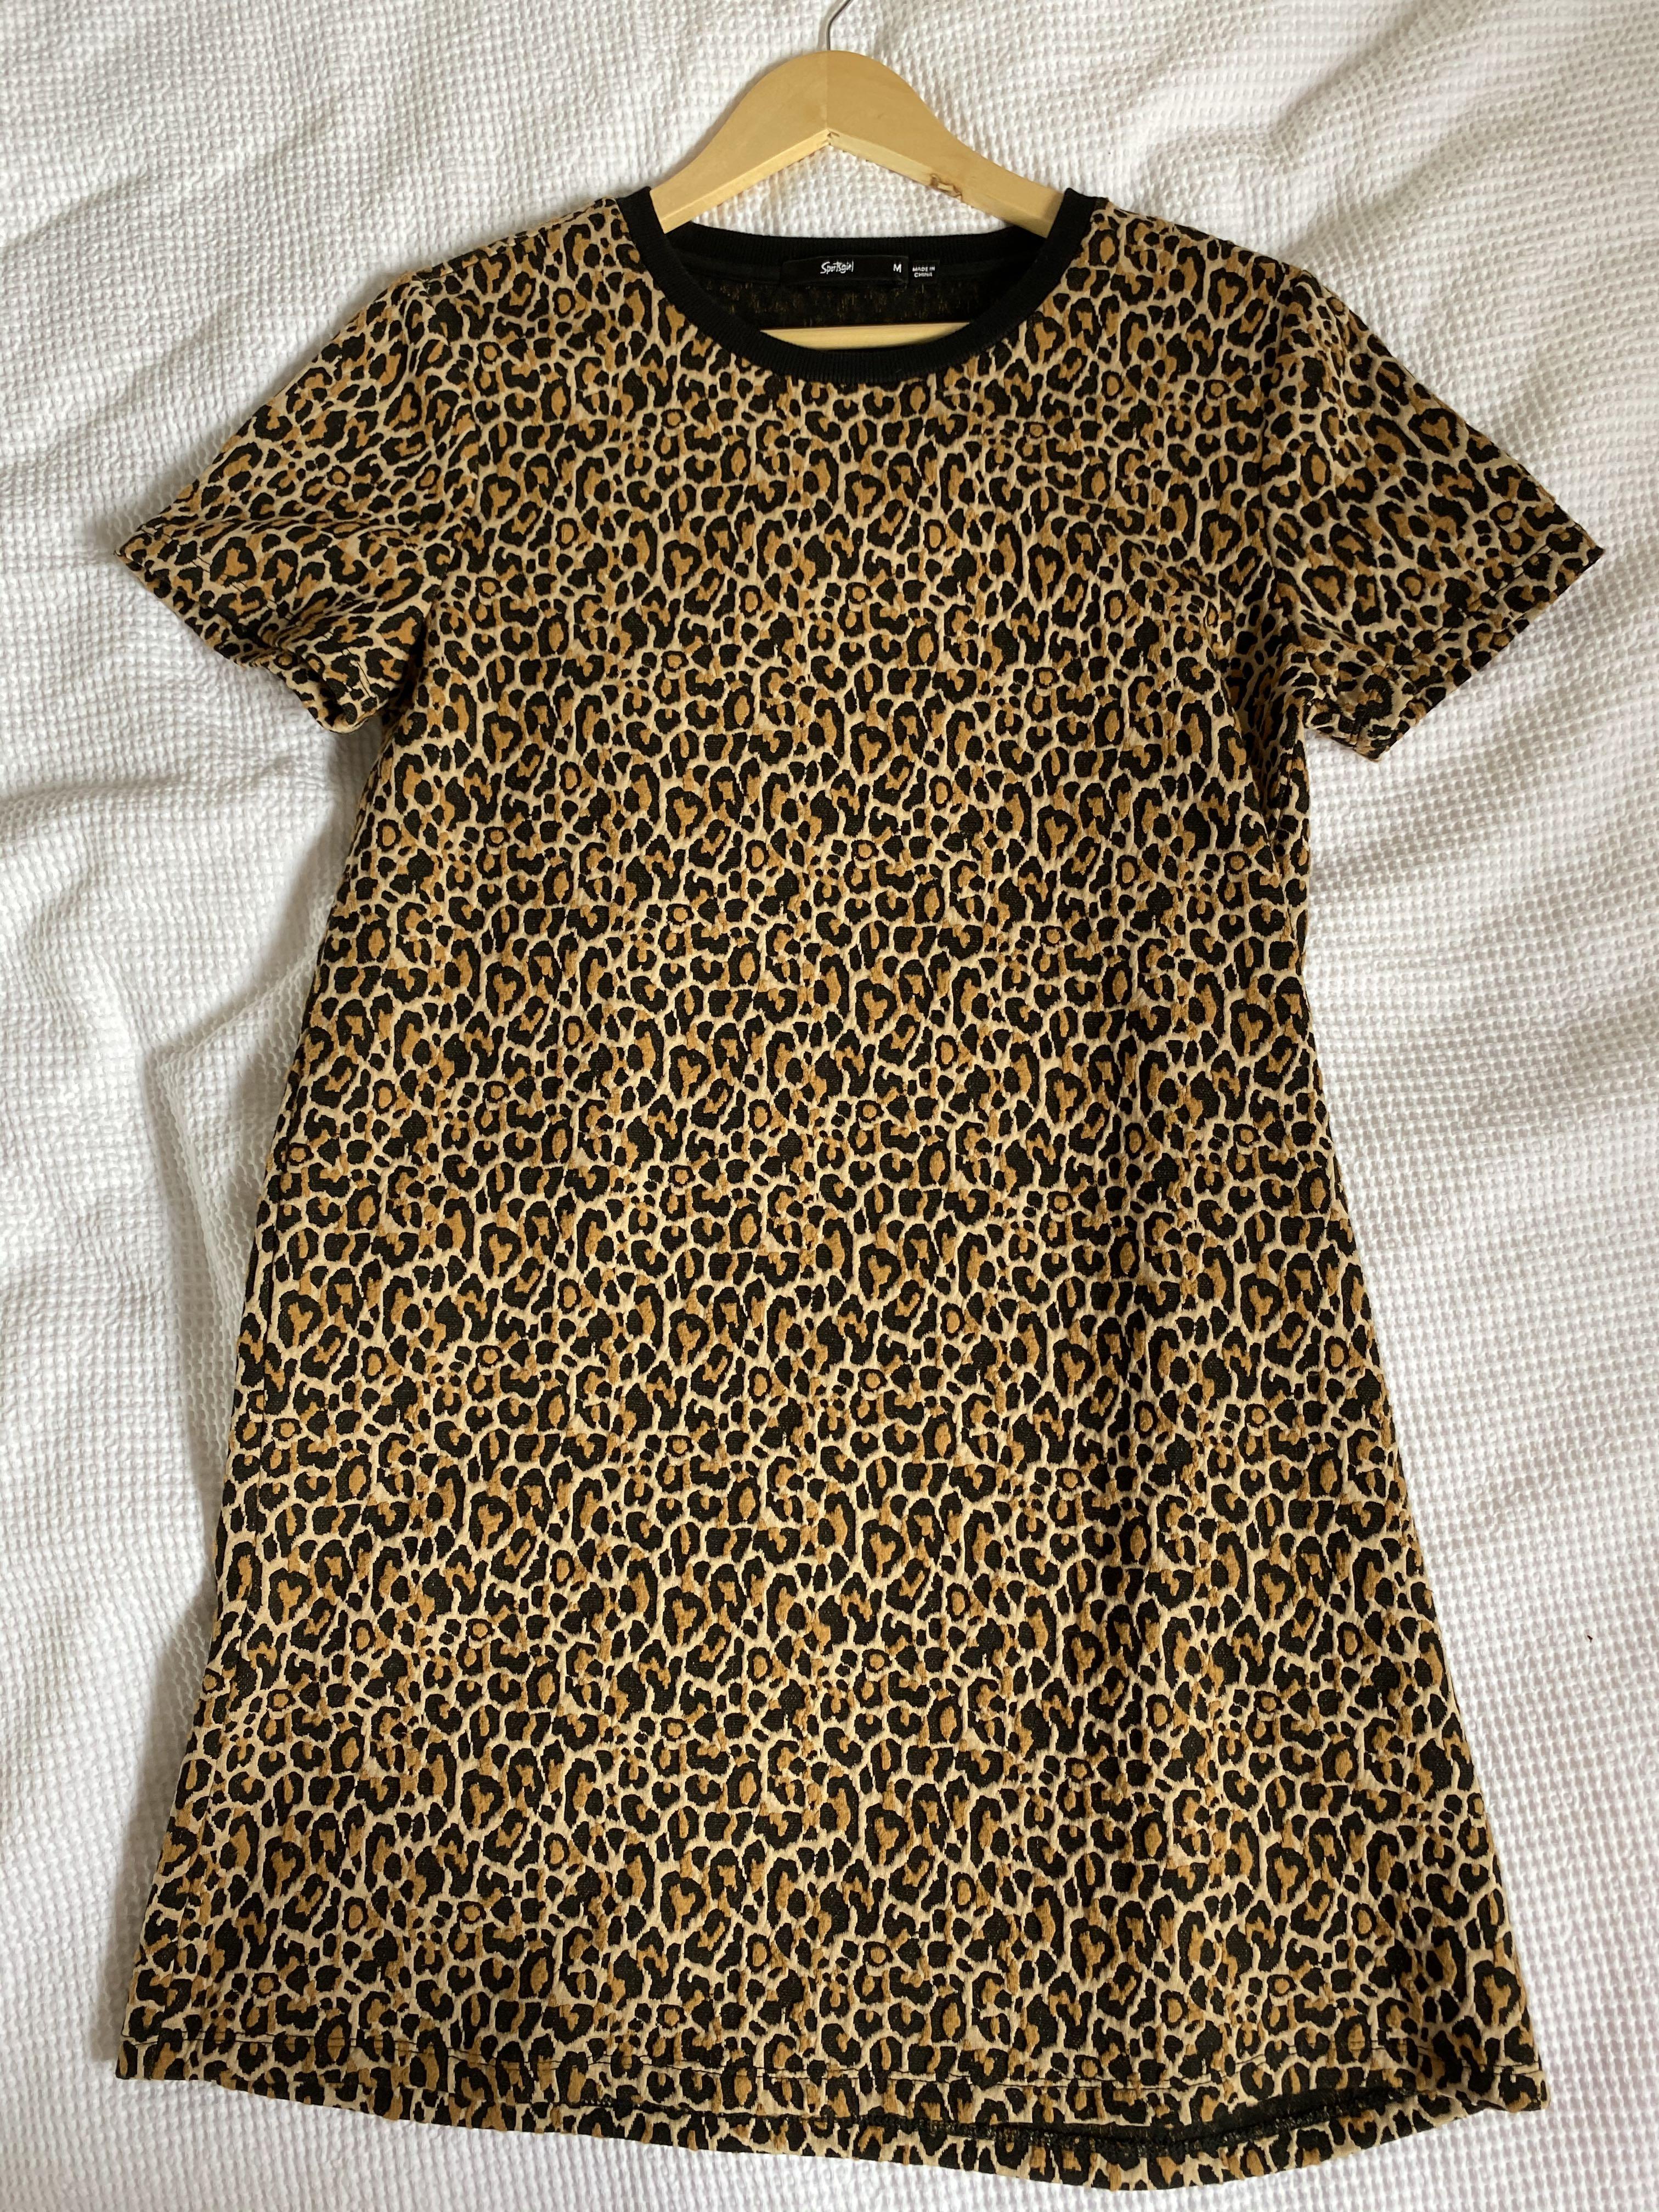 sportsgirl leopard dress